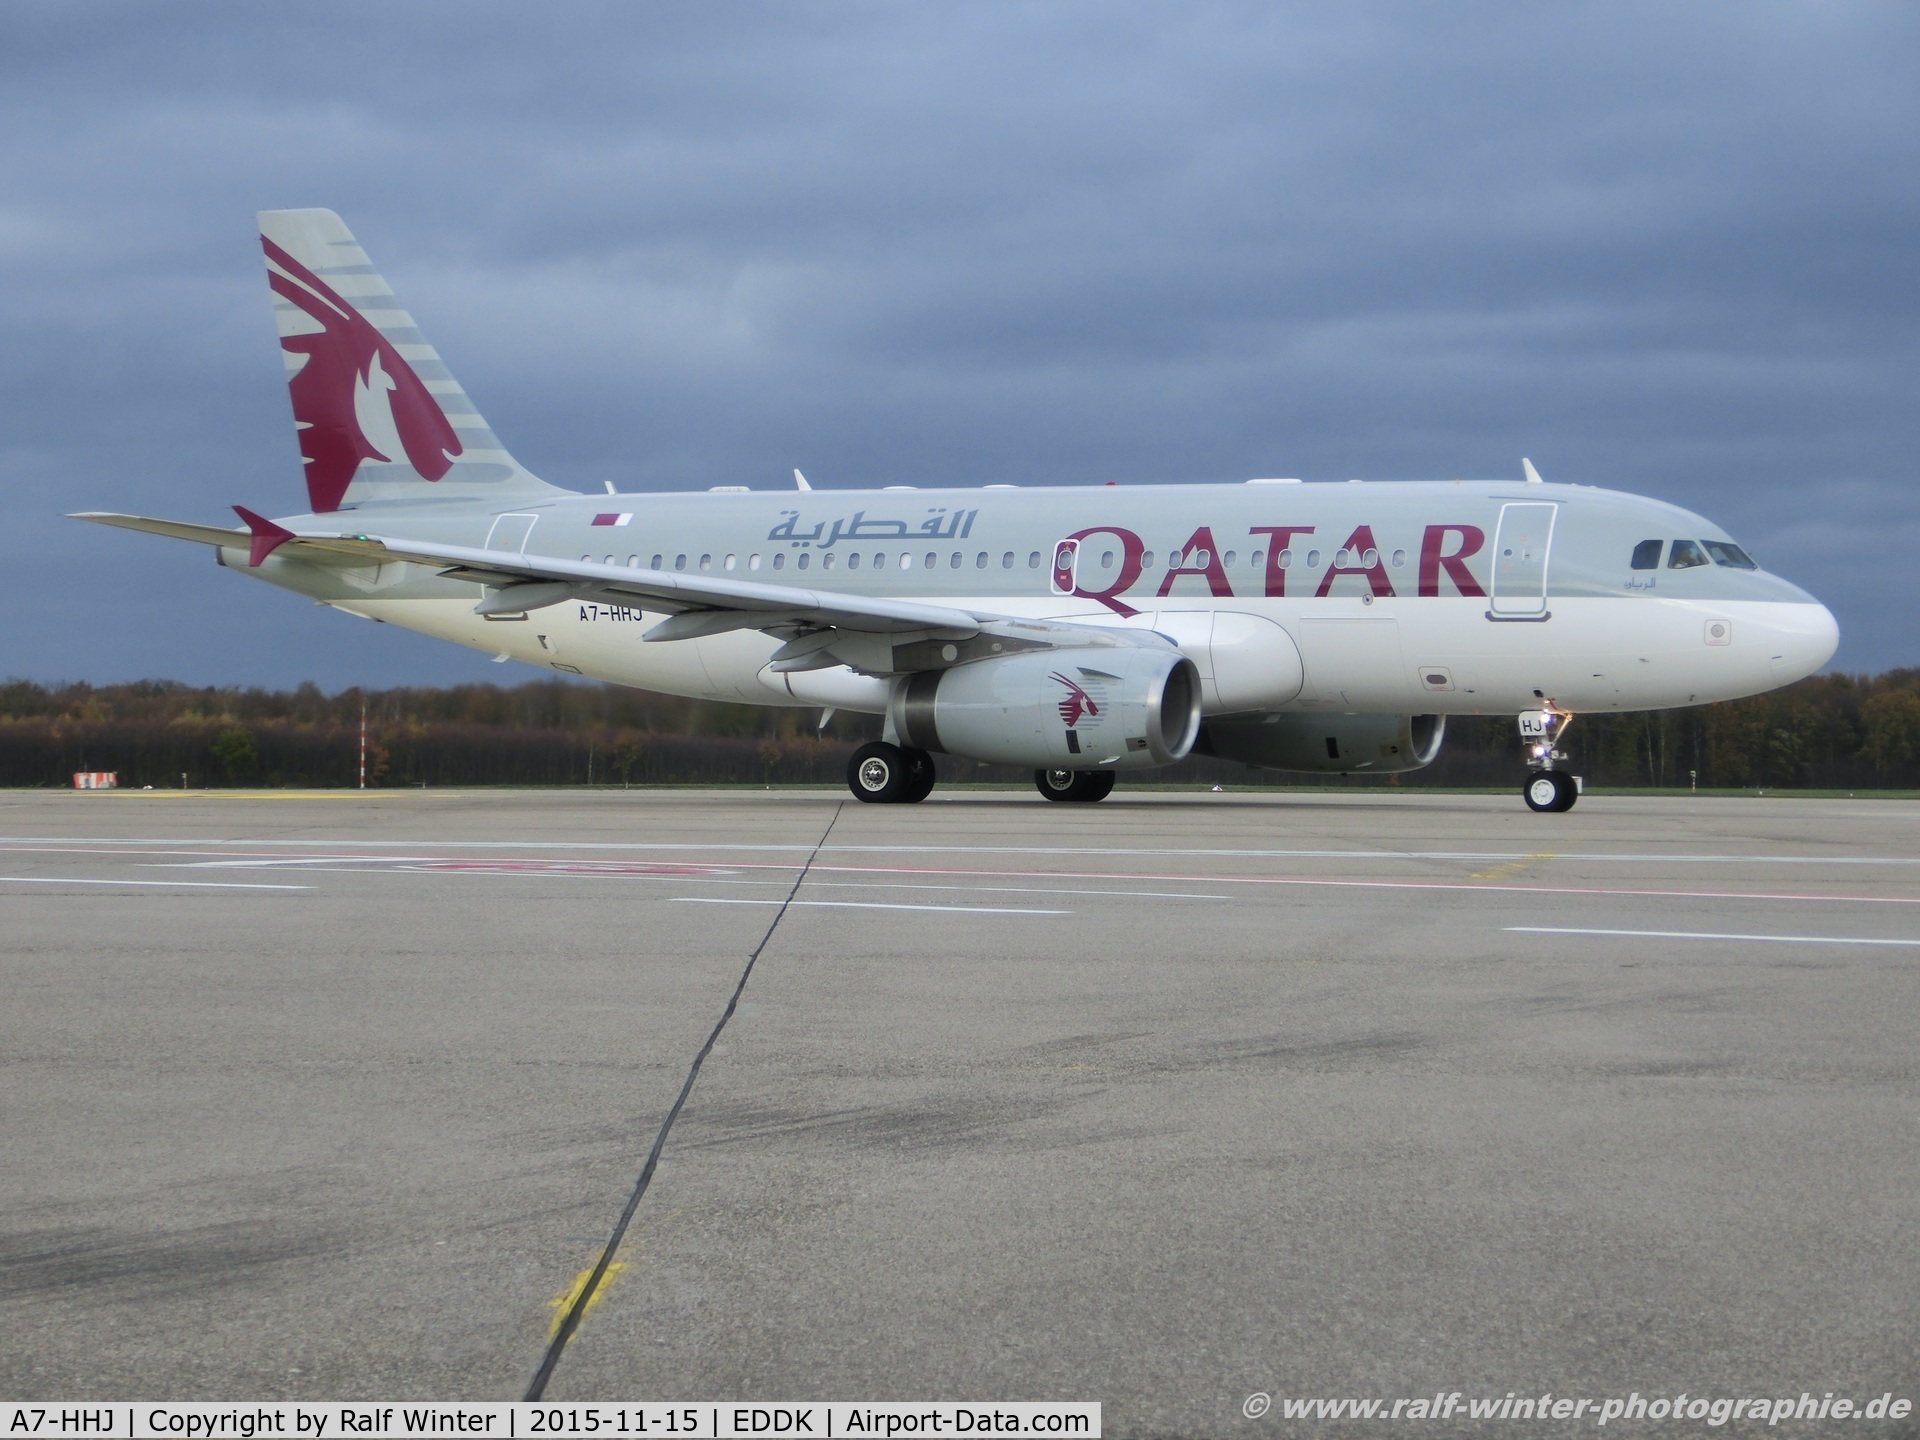 A7-HHJ, 2000 Airbus A319-133XCJ C/N 1335, Airbus A319-133X - QAF Qatar Amiri Flight 'Al Rayan' - 1335 - A7-HHJ - 15.11.2015 - CGN